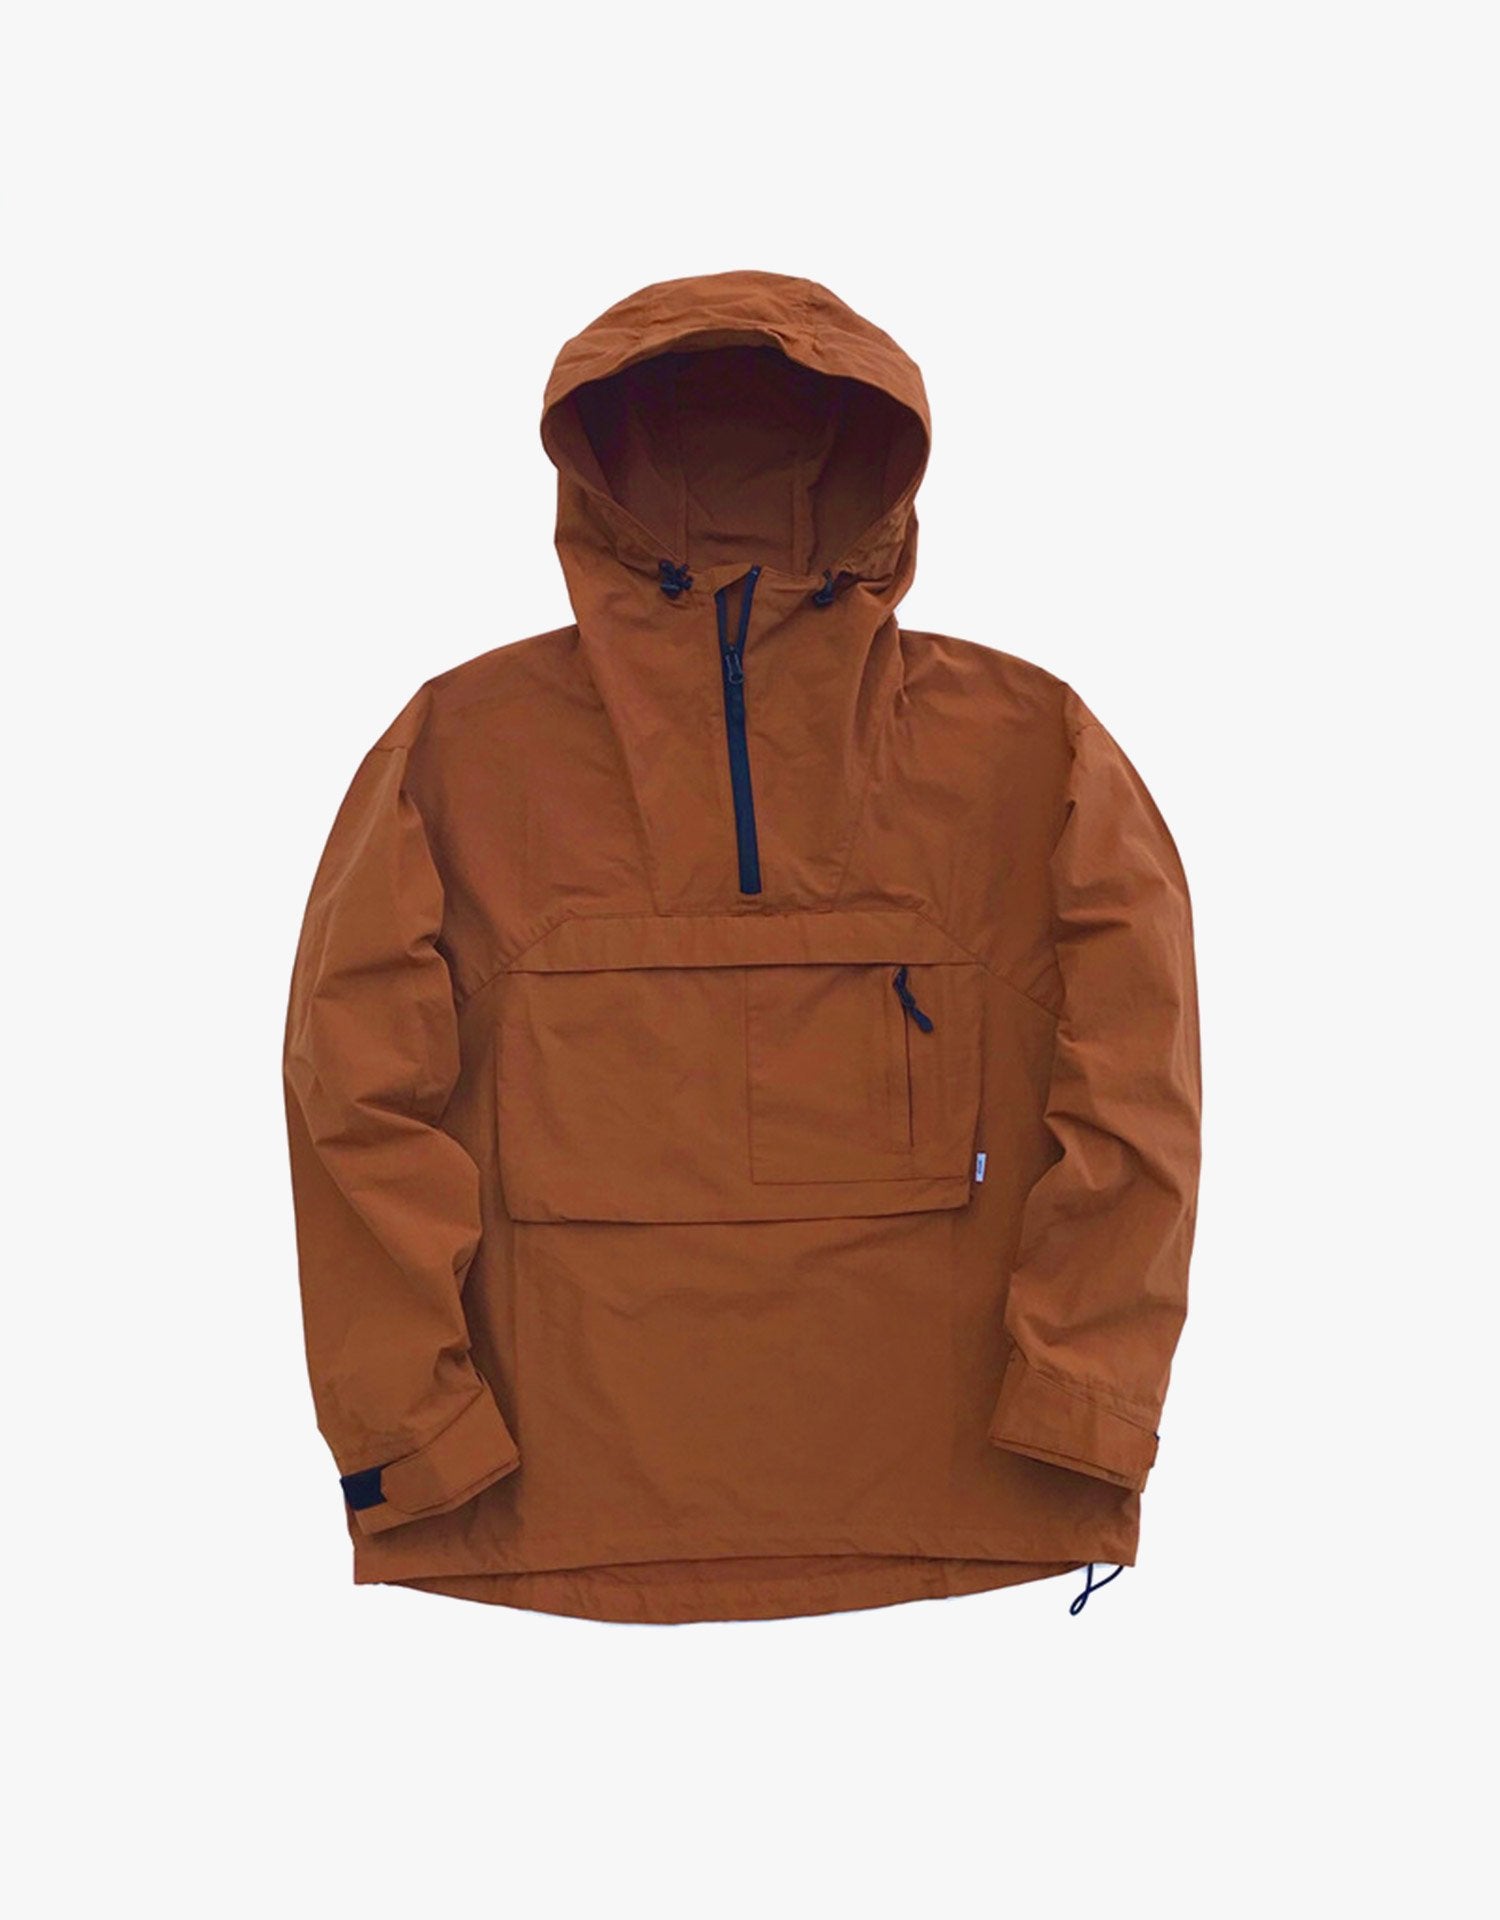 TopBasics Half-Zip Pullover Jacket